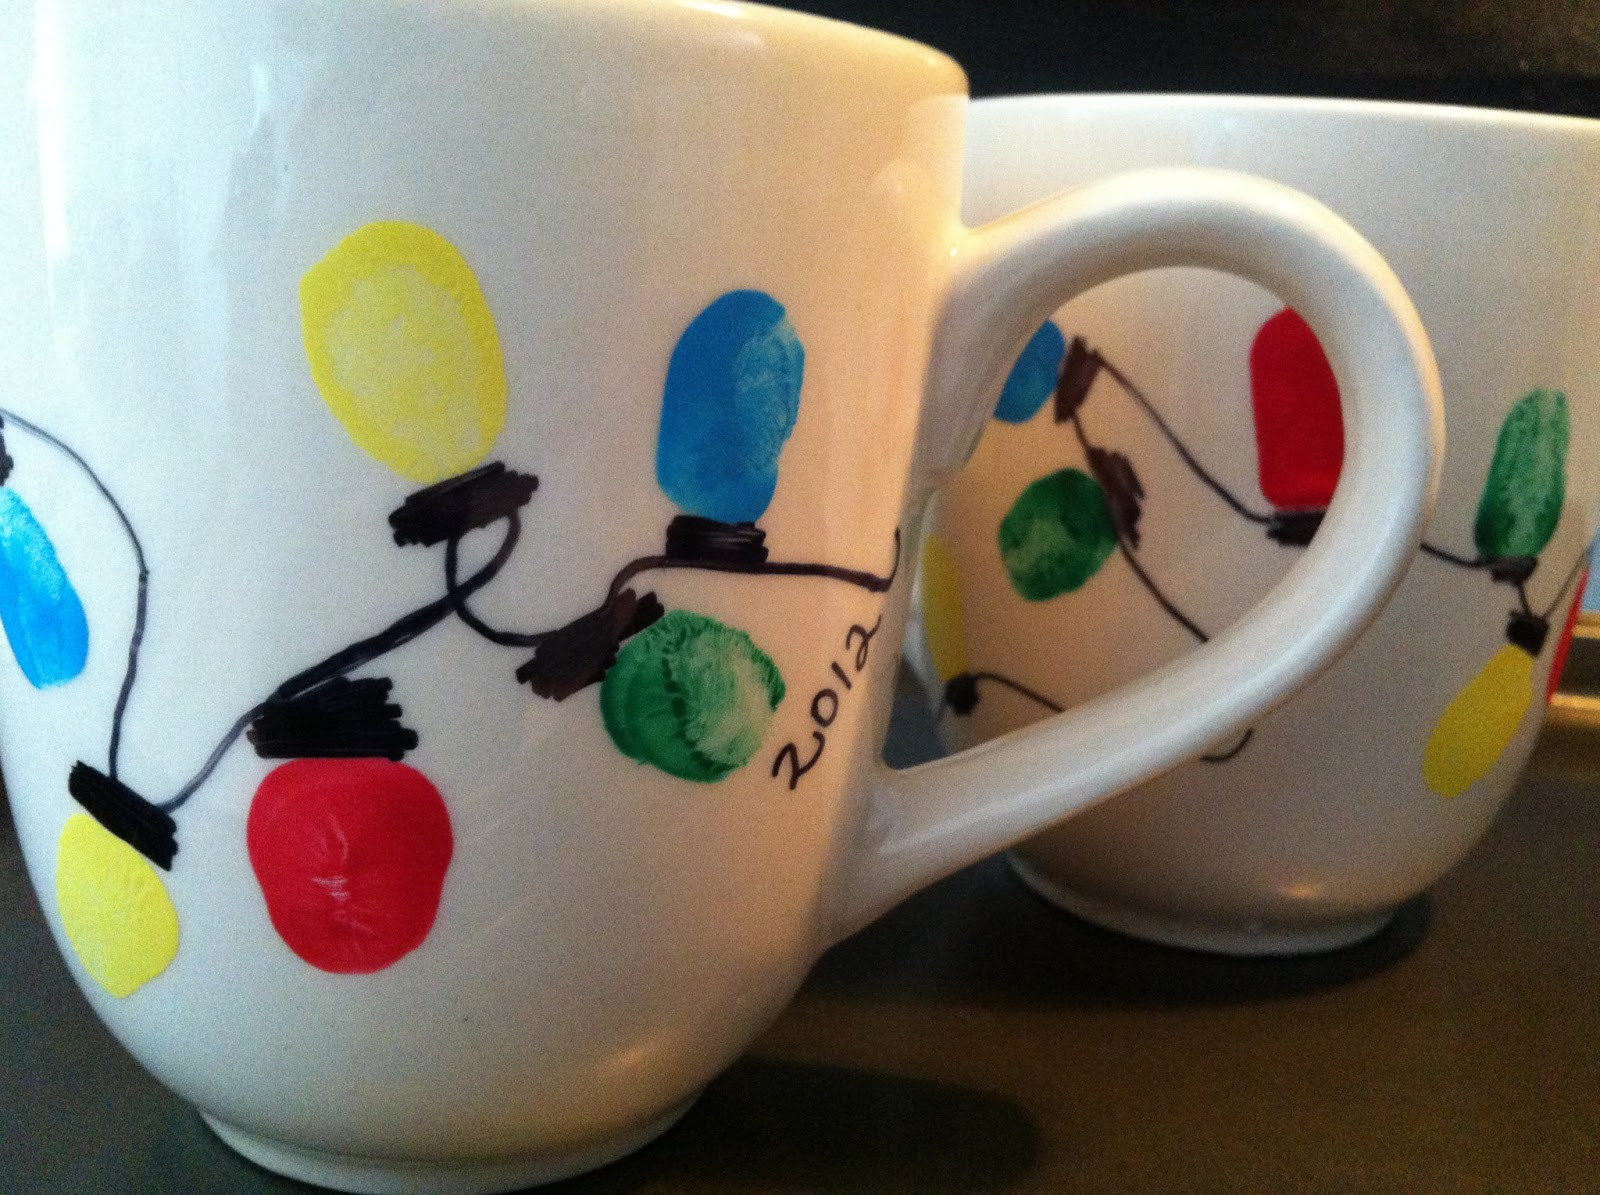 Best ideas about DIY Christmas Mug
. Save or Pin Handmade by CJ DIY Christmas Sharpie Mugs Now.